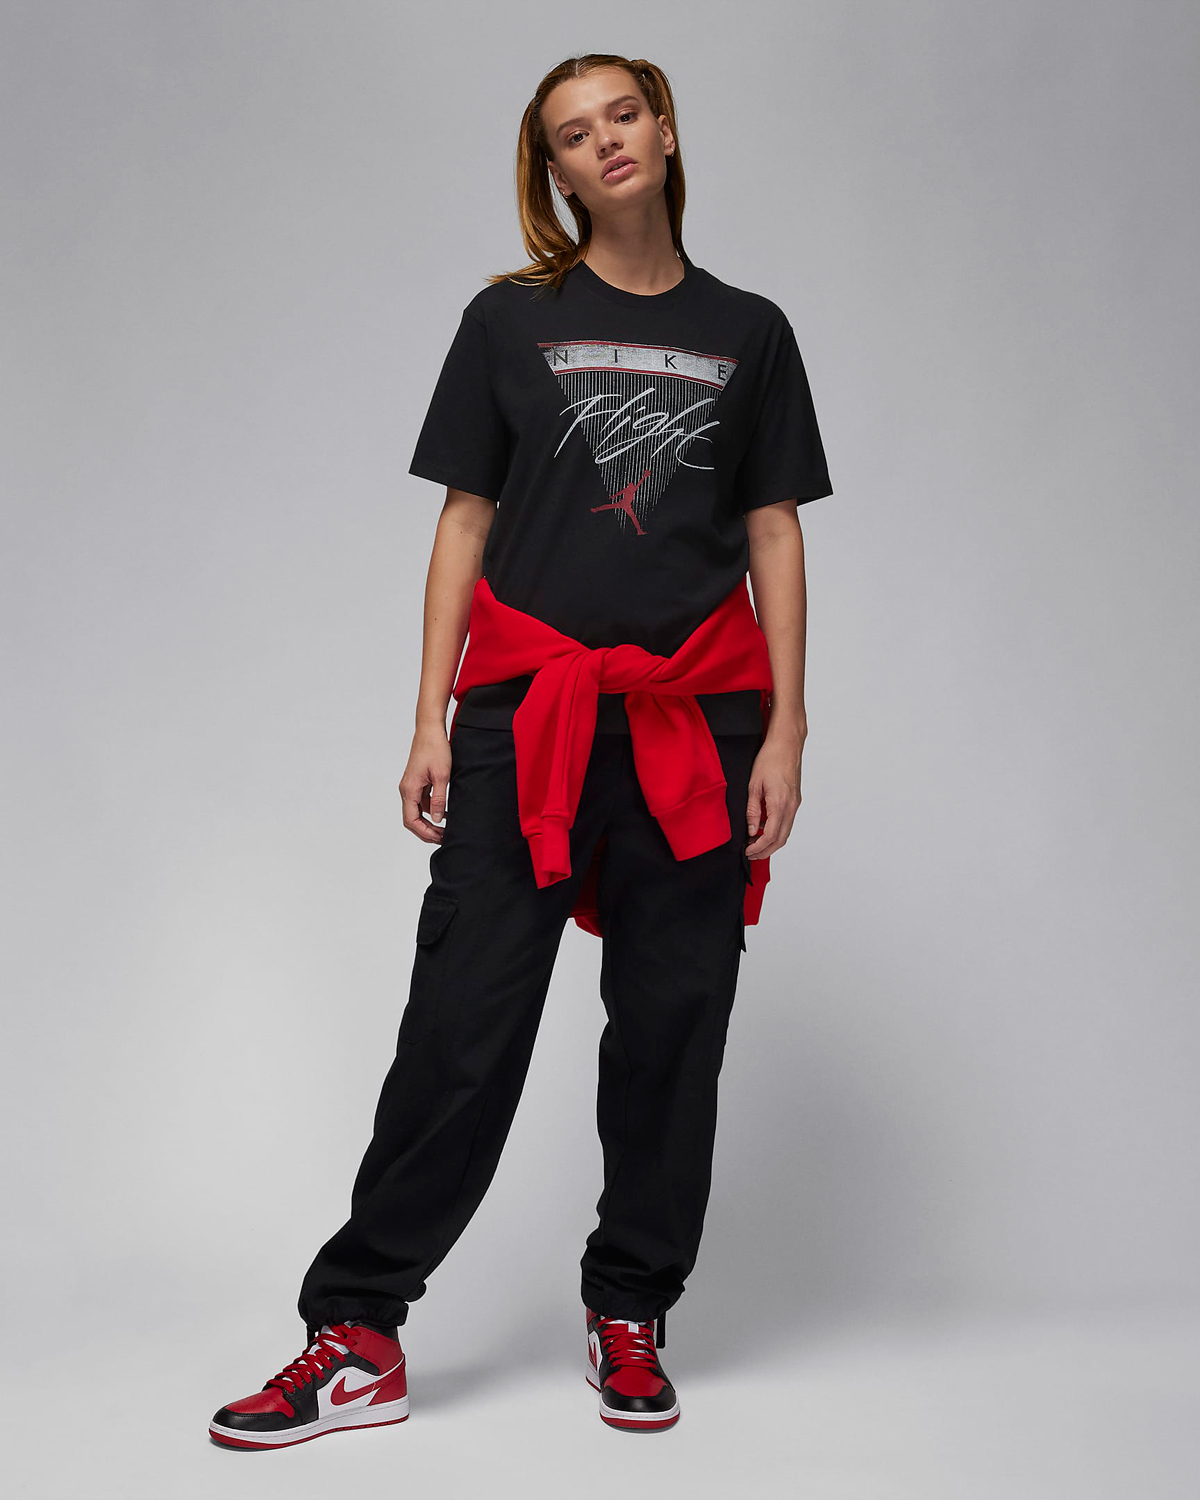 Jordan-Flight-Heritage-Womens-Graphic-T-Shirt-Black-White-Red